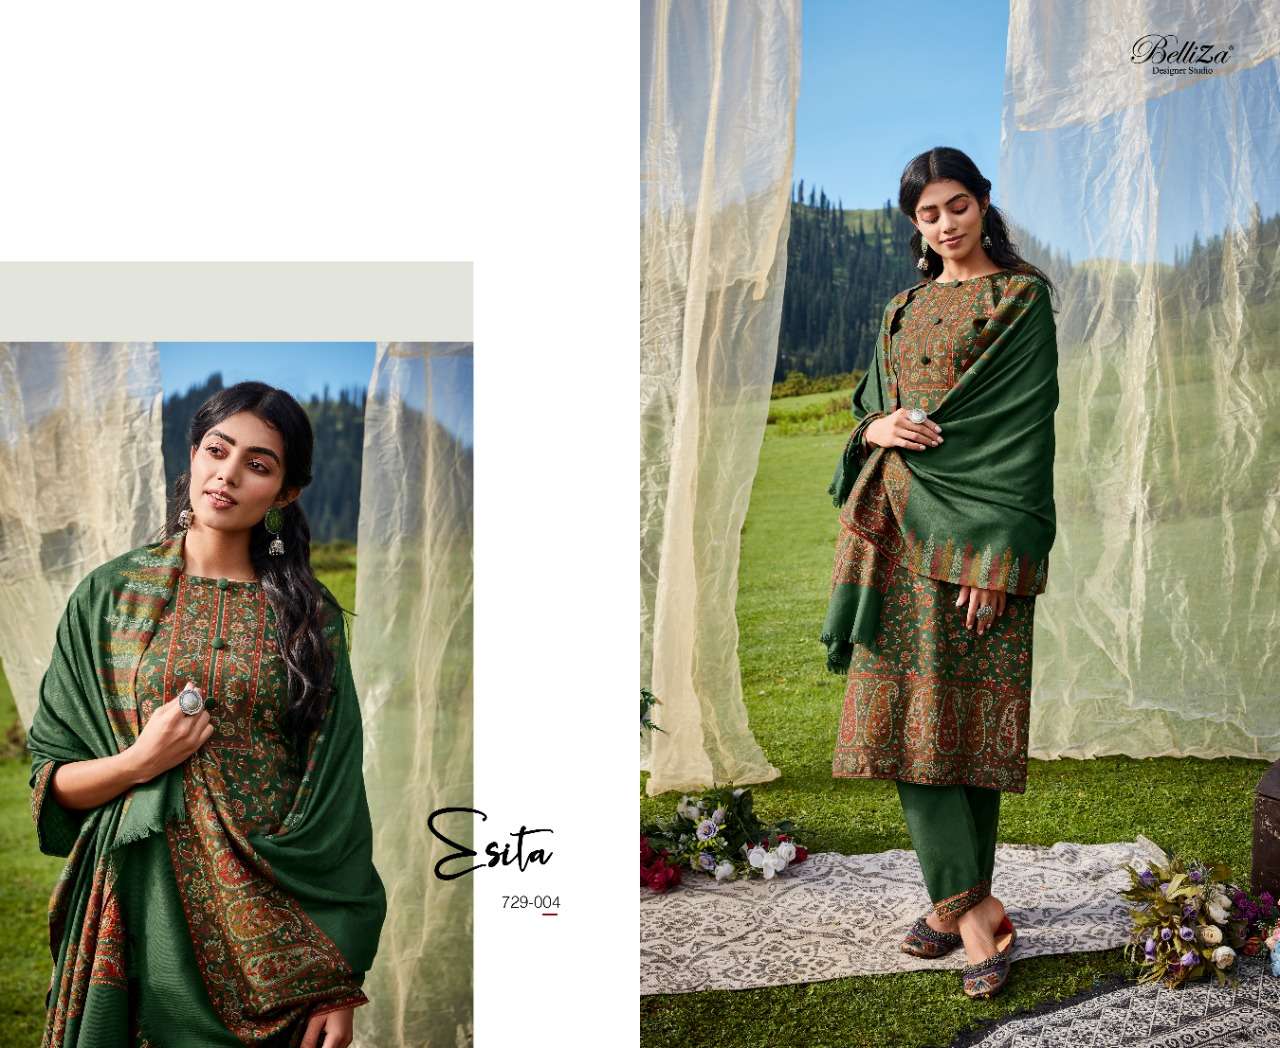 belliza designer faariah 729-001-729-008 series designer pasmina salwar kameez online dealer wholesale price surat 